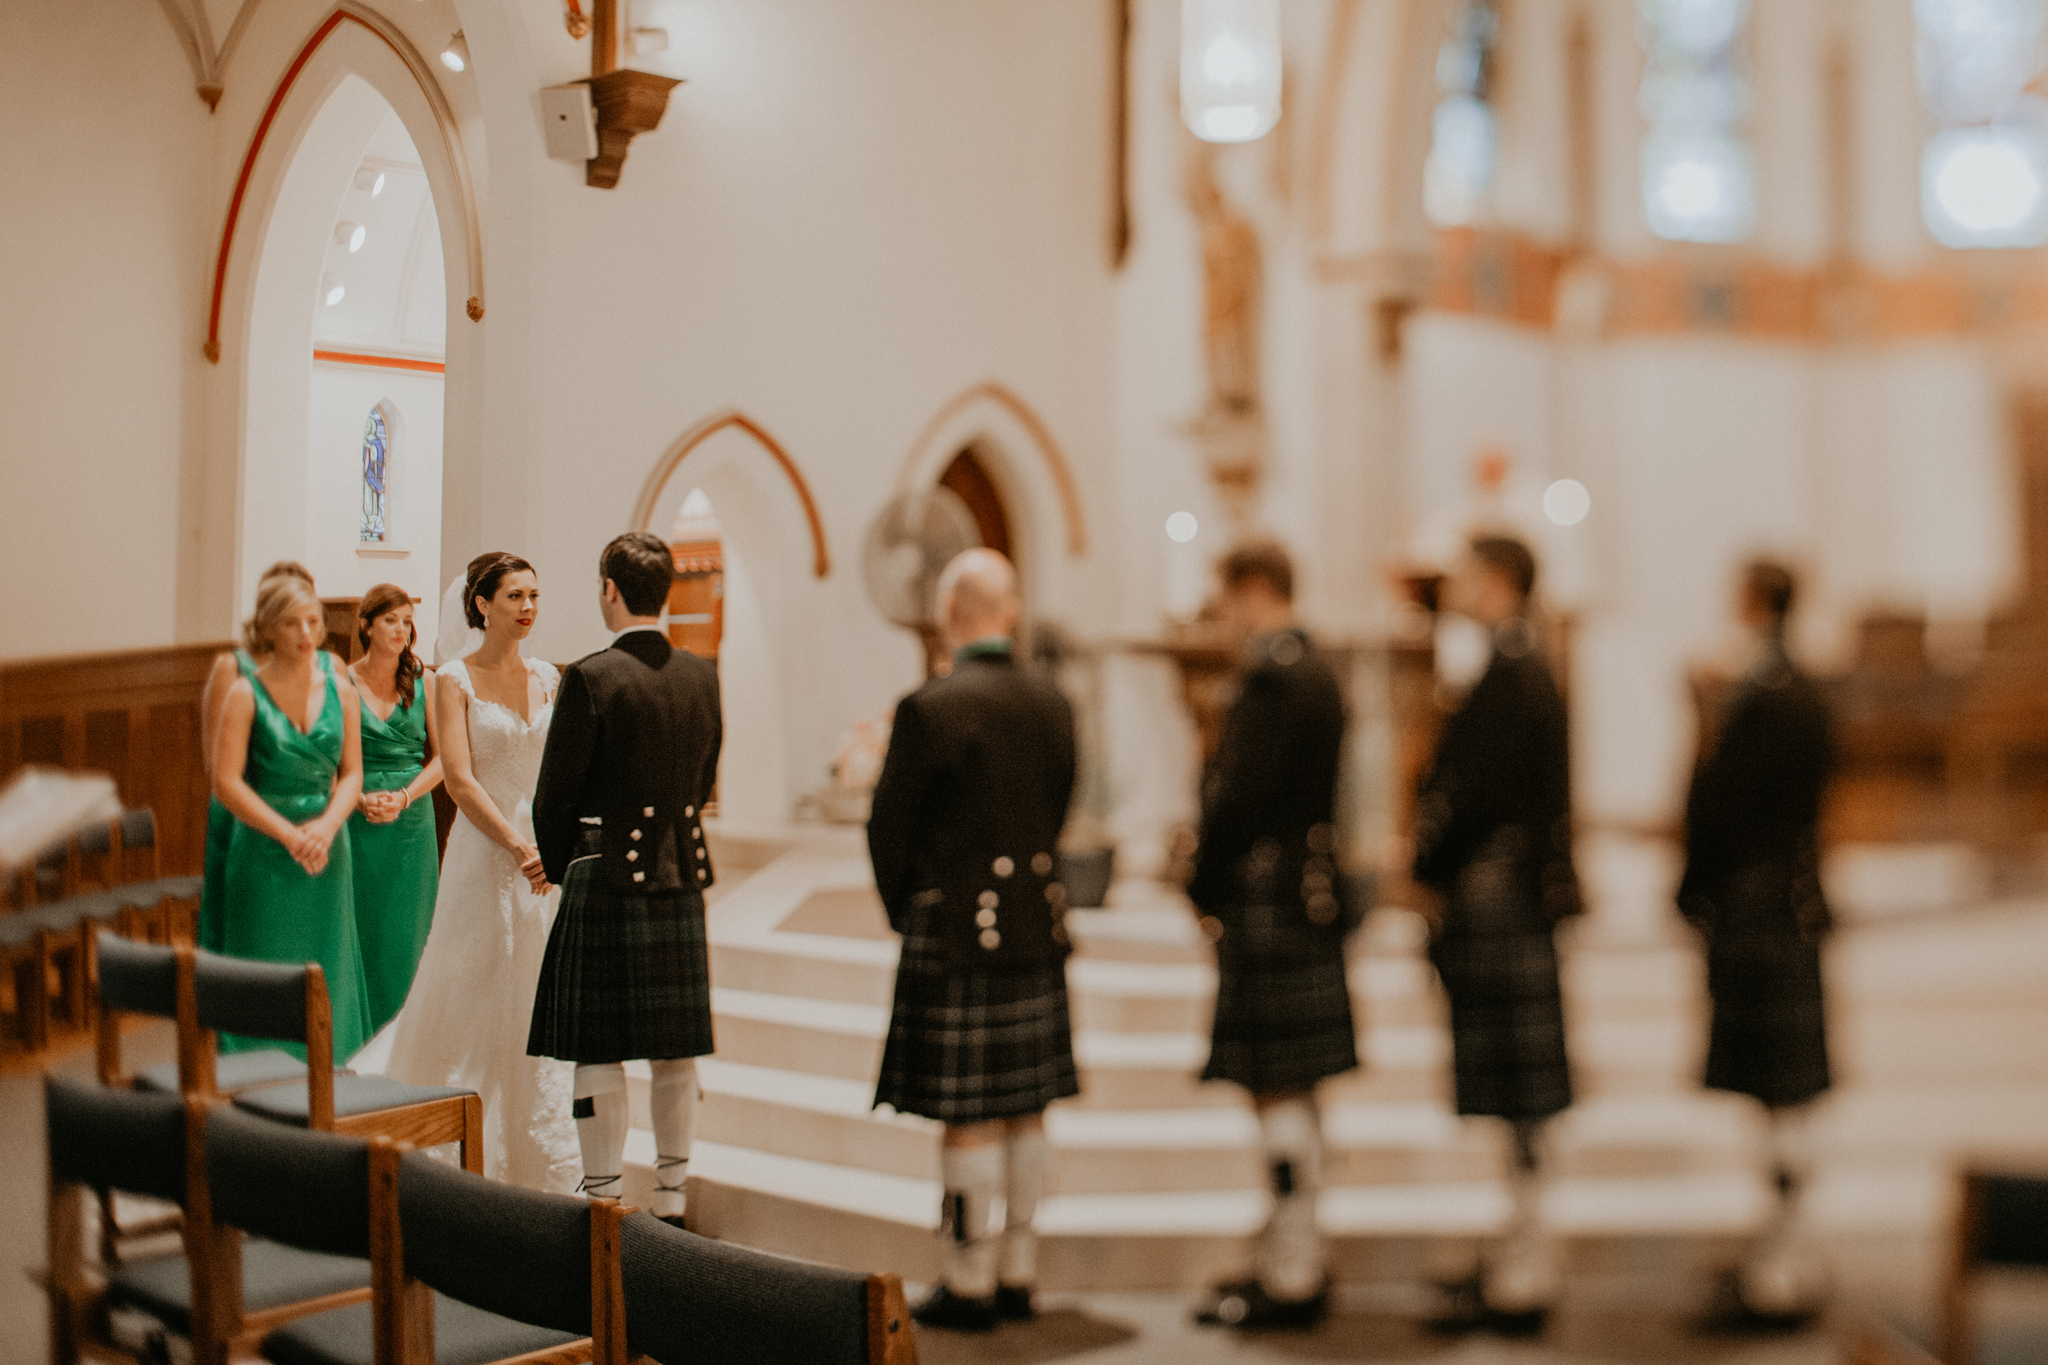 Wedding party in Scottish church wedding